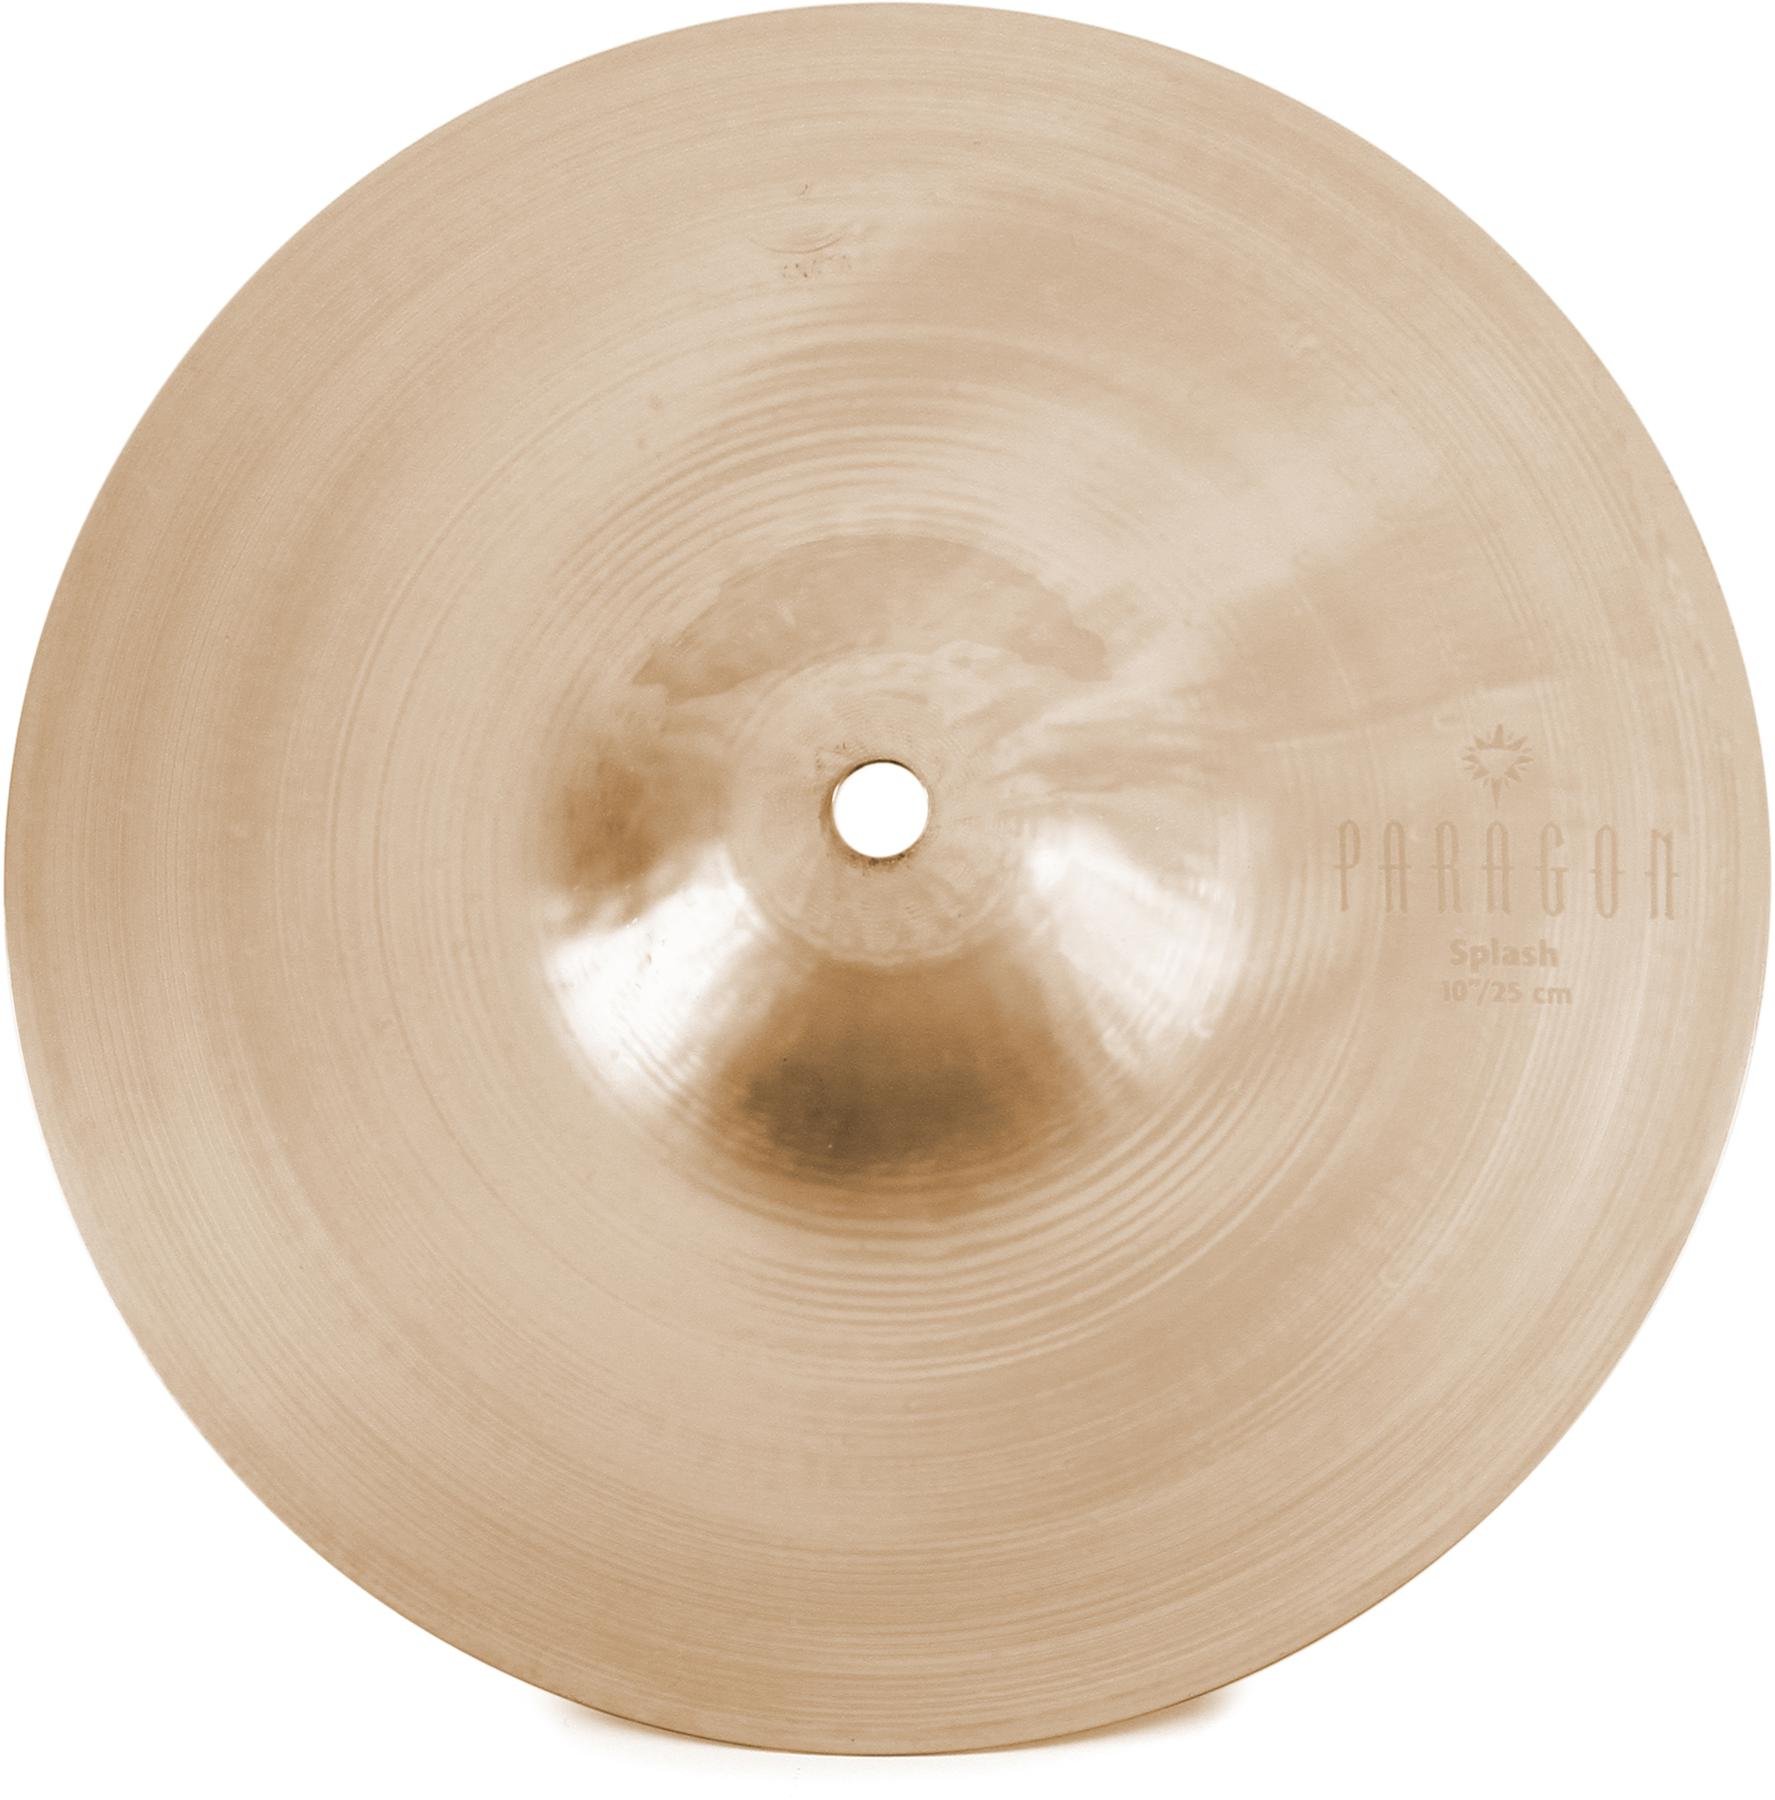 Sabian 10 inch Paragon Splash Cymbal - Brilliant Finish | Sweetwater